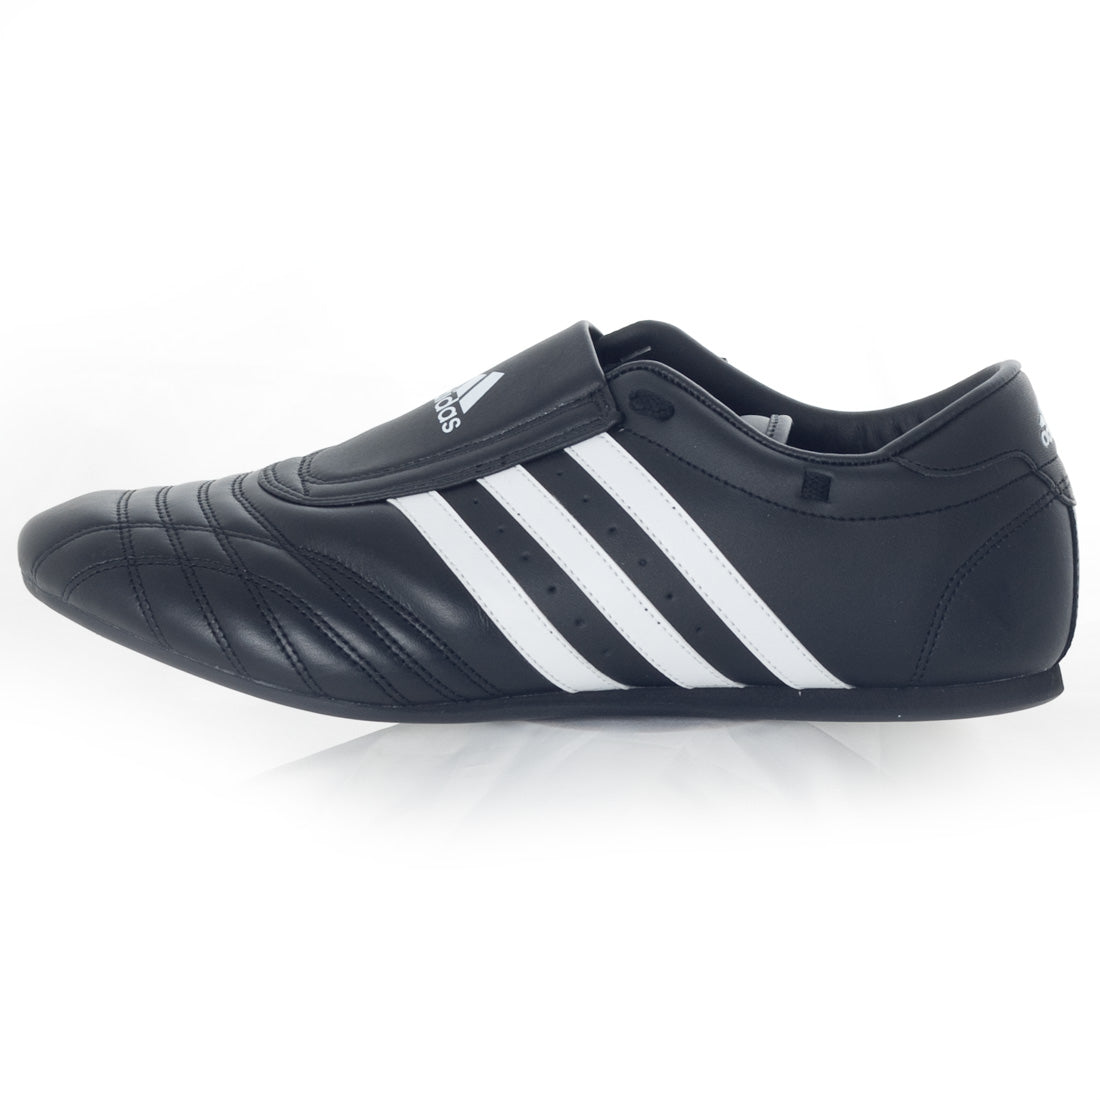 adidas chaussures SM II - noir, ADITSS02